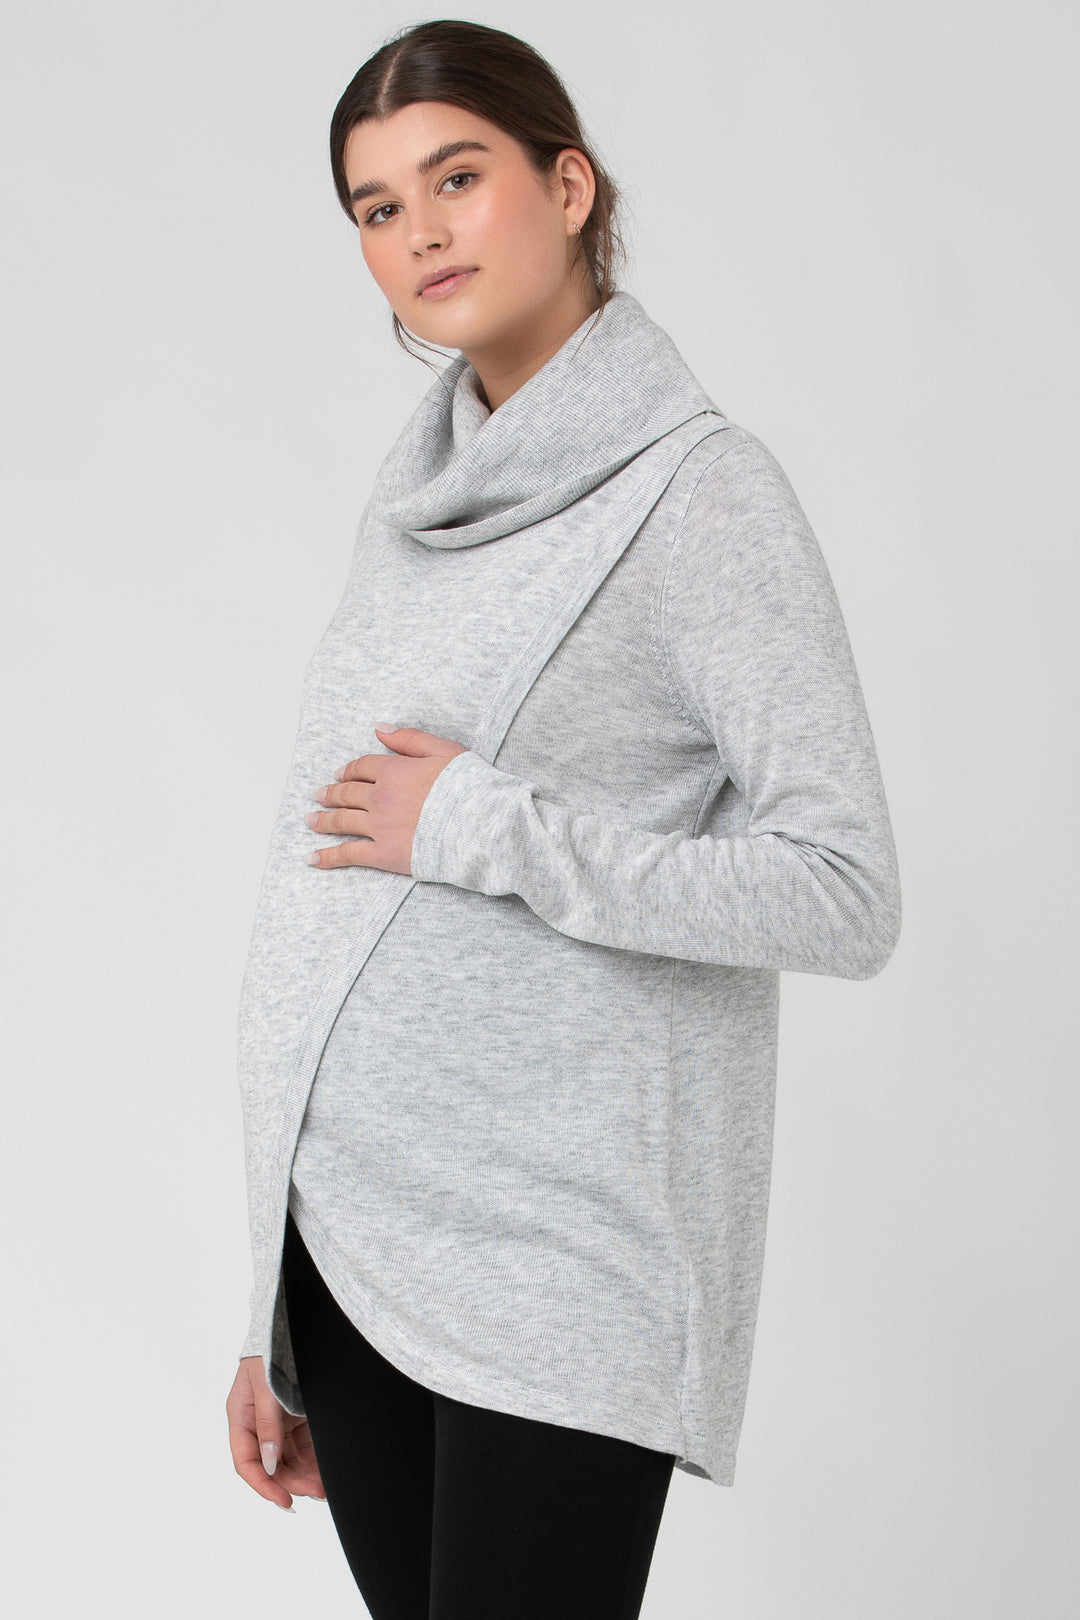 Cowl Neck Maternity Nursing Knit in Heather Grey